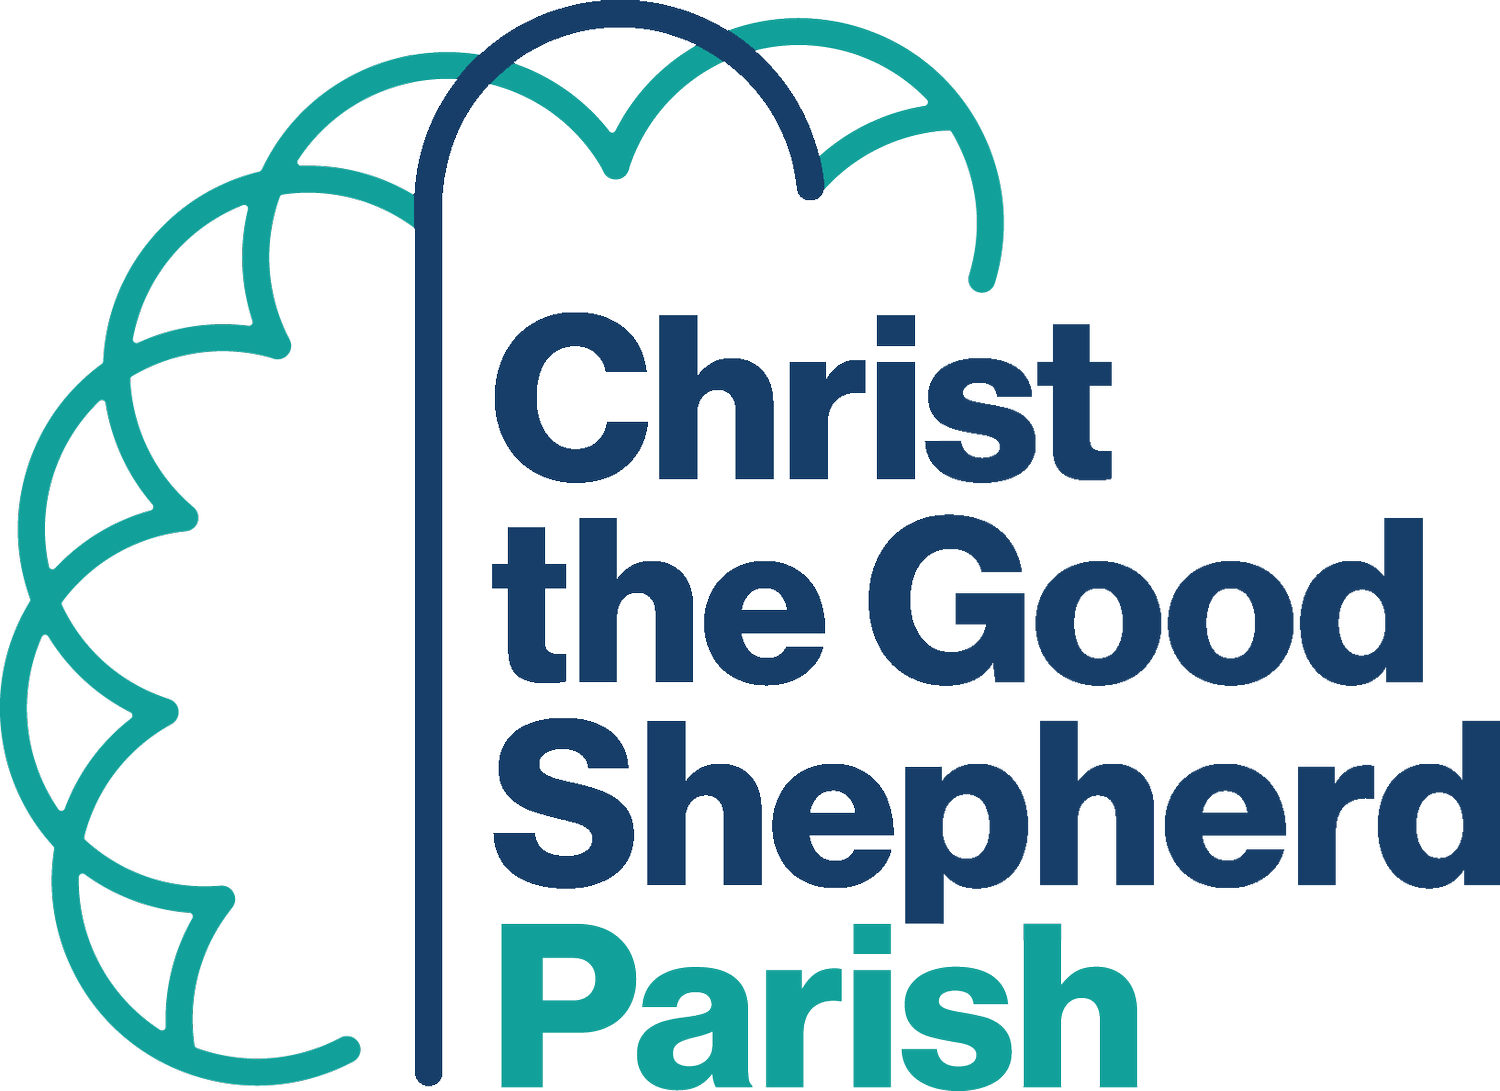 Christ the Good Shepherd Parish